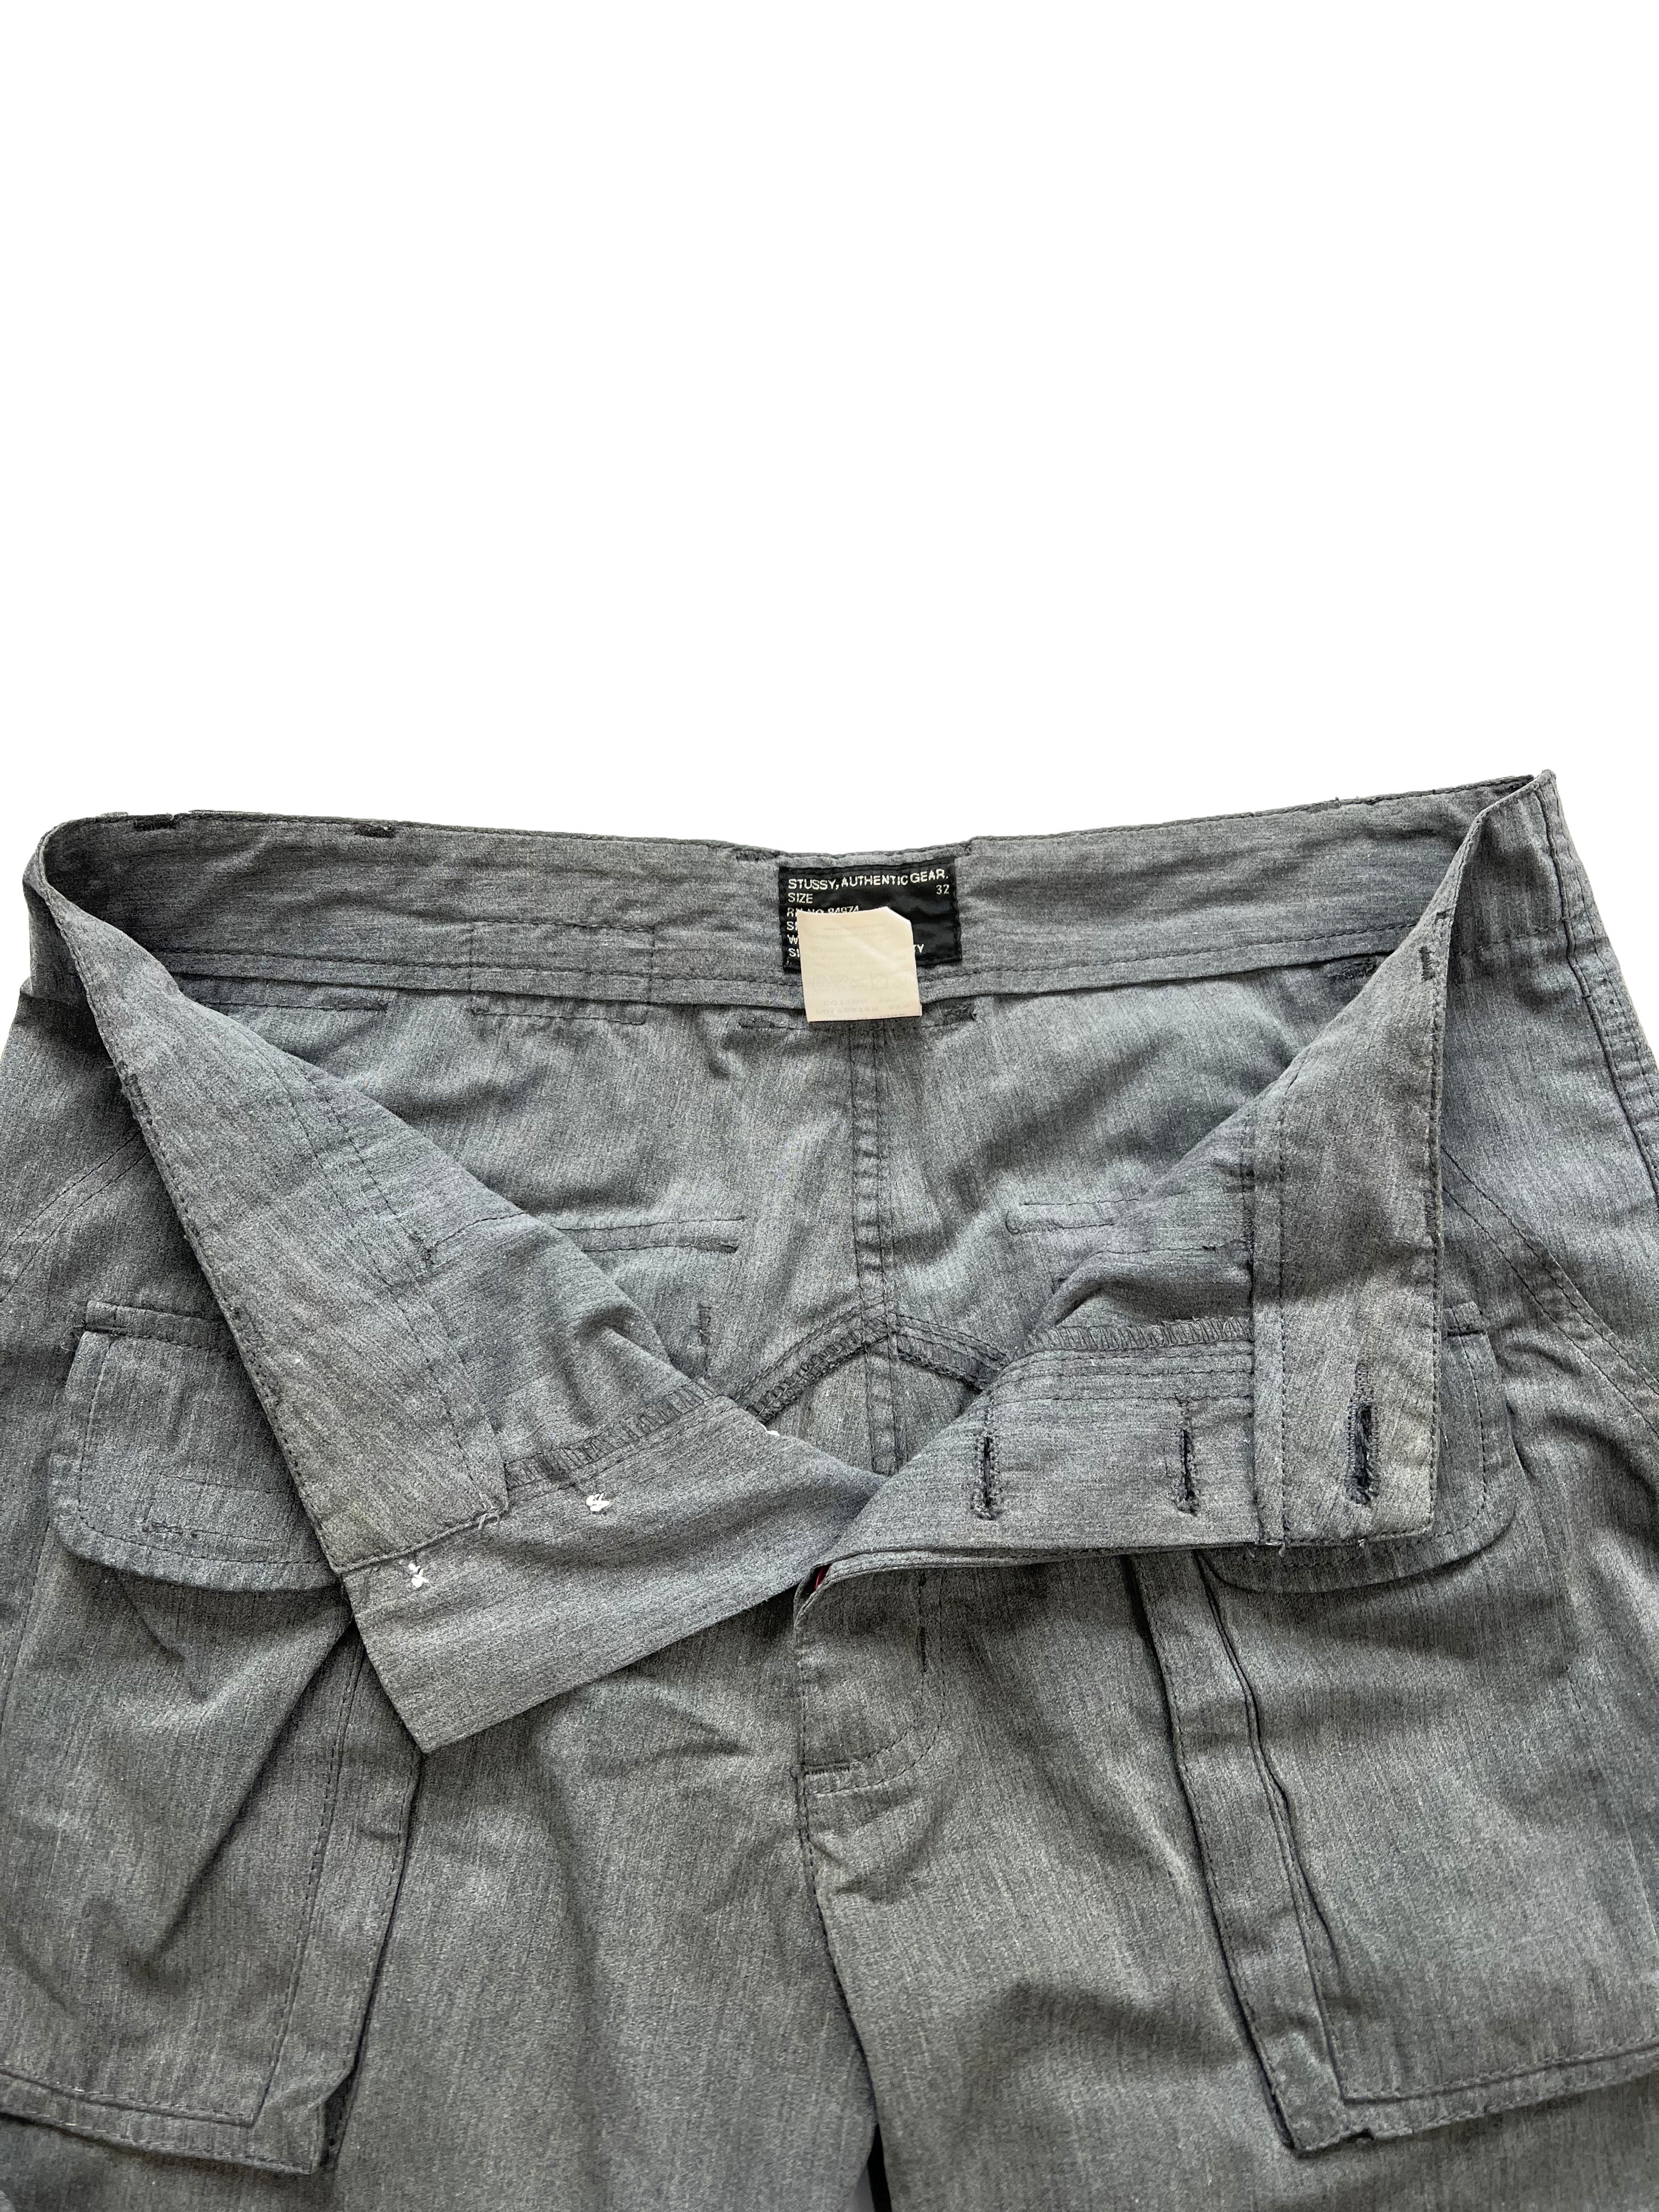 Stussy Grey Multi Pocket Cargo Trousers 00's